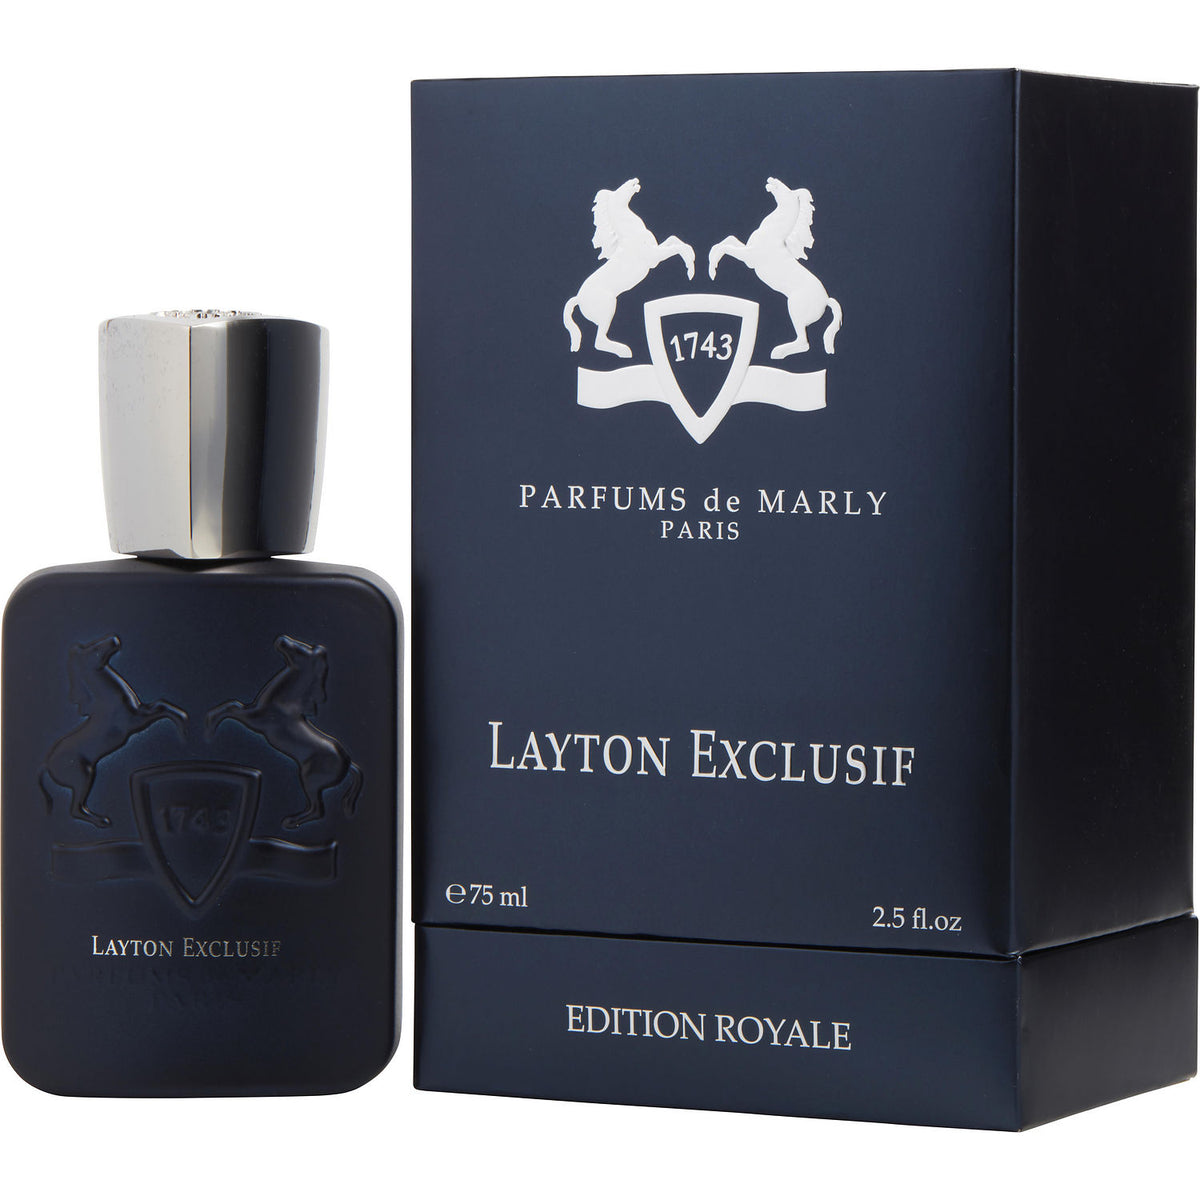 Layton Exclusif by Parfums de Marly Fragrance Samples | DecantX | Eau de Parfum Scent and Travel Size Perfume Atomizer